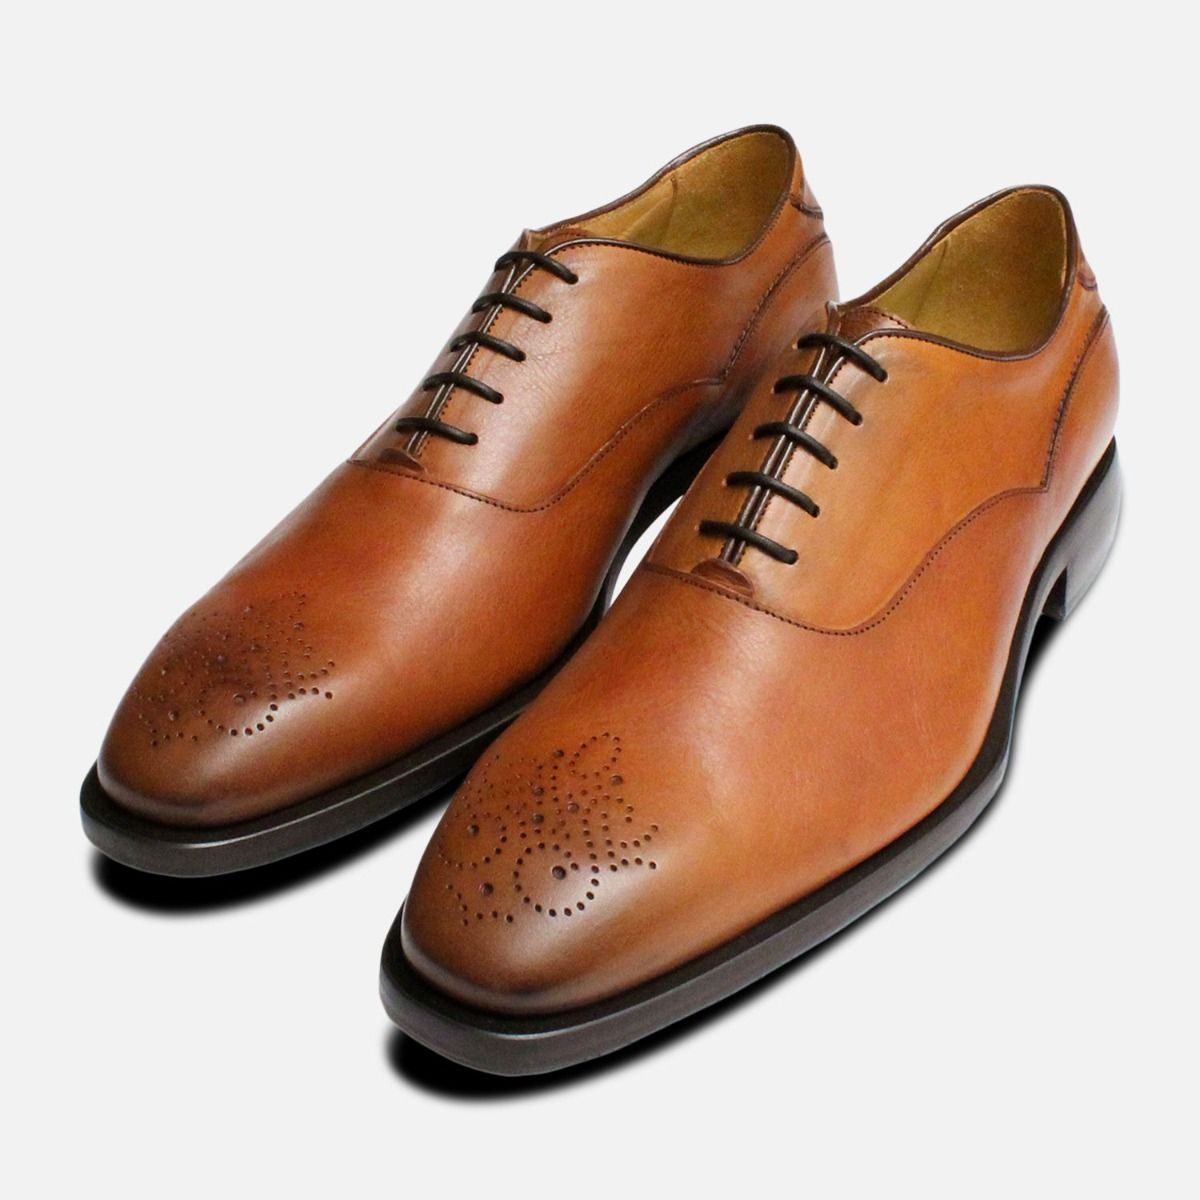 Oliver Sweeney Shoes Sabatini Cognac Brogues